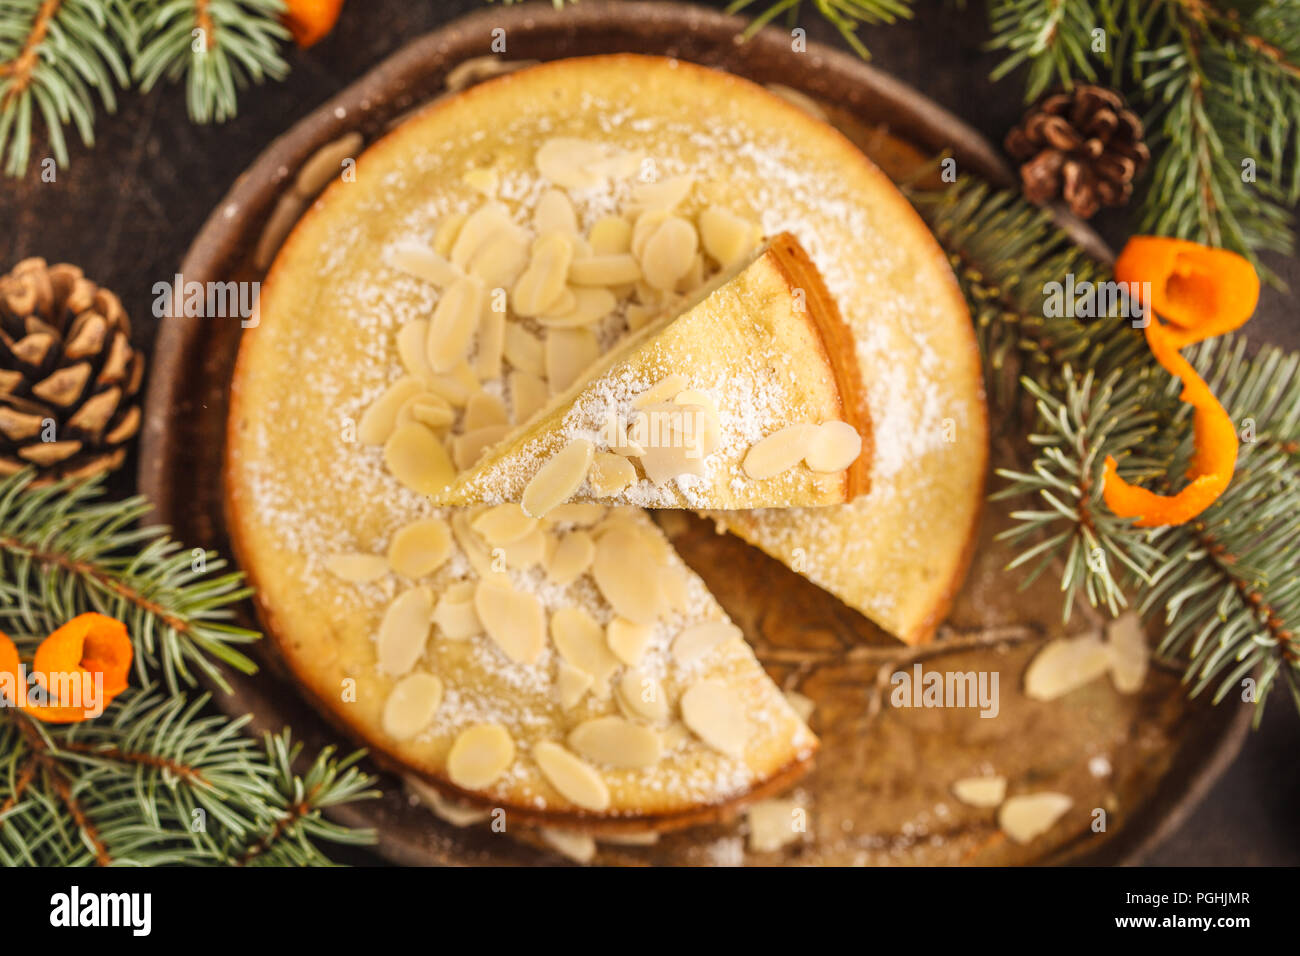 https://c8.alamy.com/comp/PGHJMR/traditional-christmas-norwegian-almond-cake-in-christmas-decorations-dark-background-christmas-dessert-concept-PGHJMR.jpg